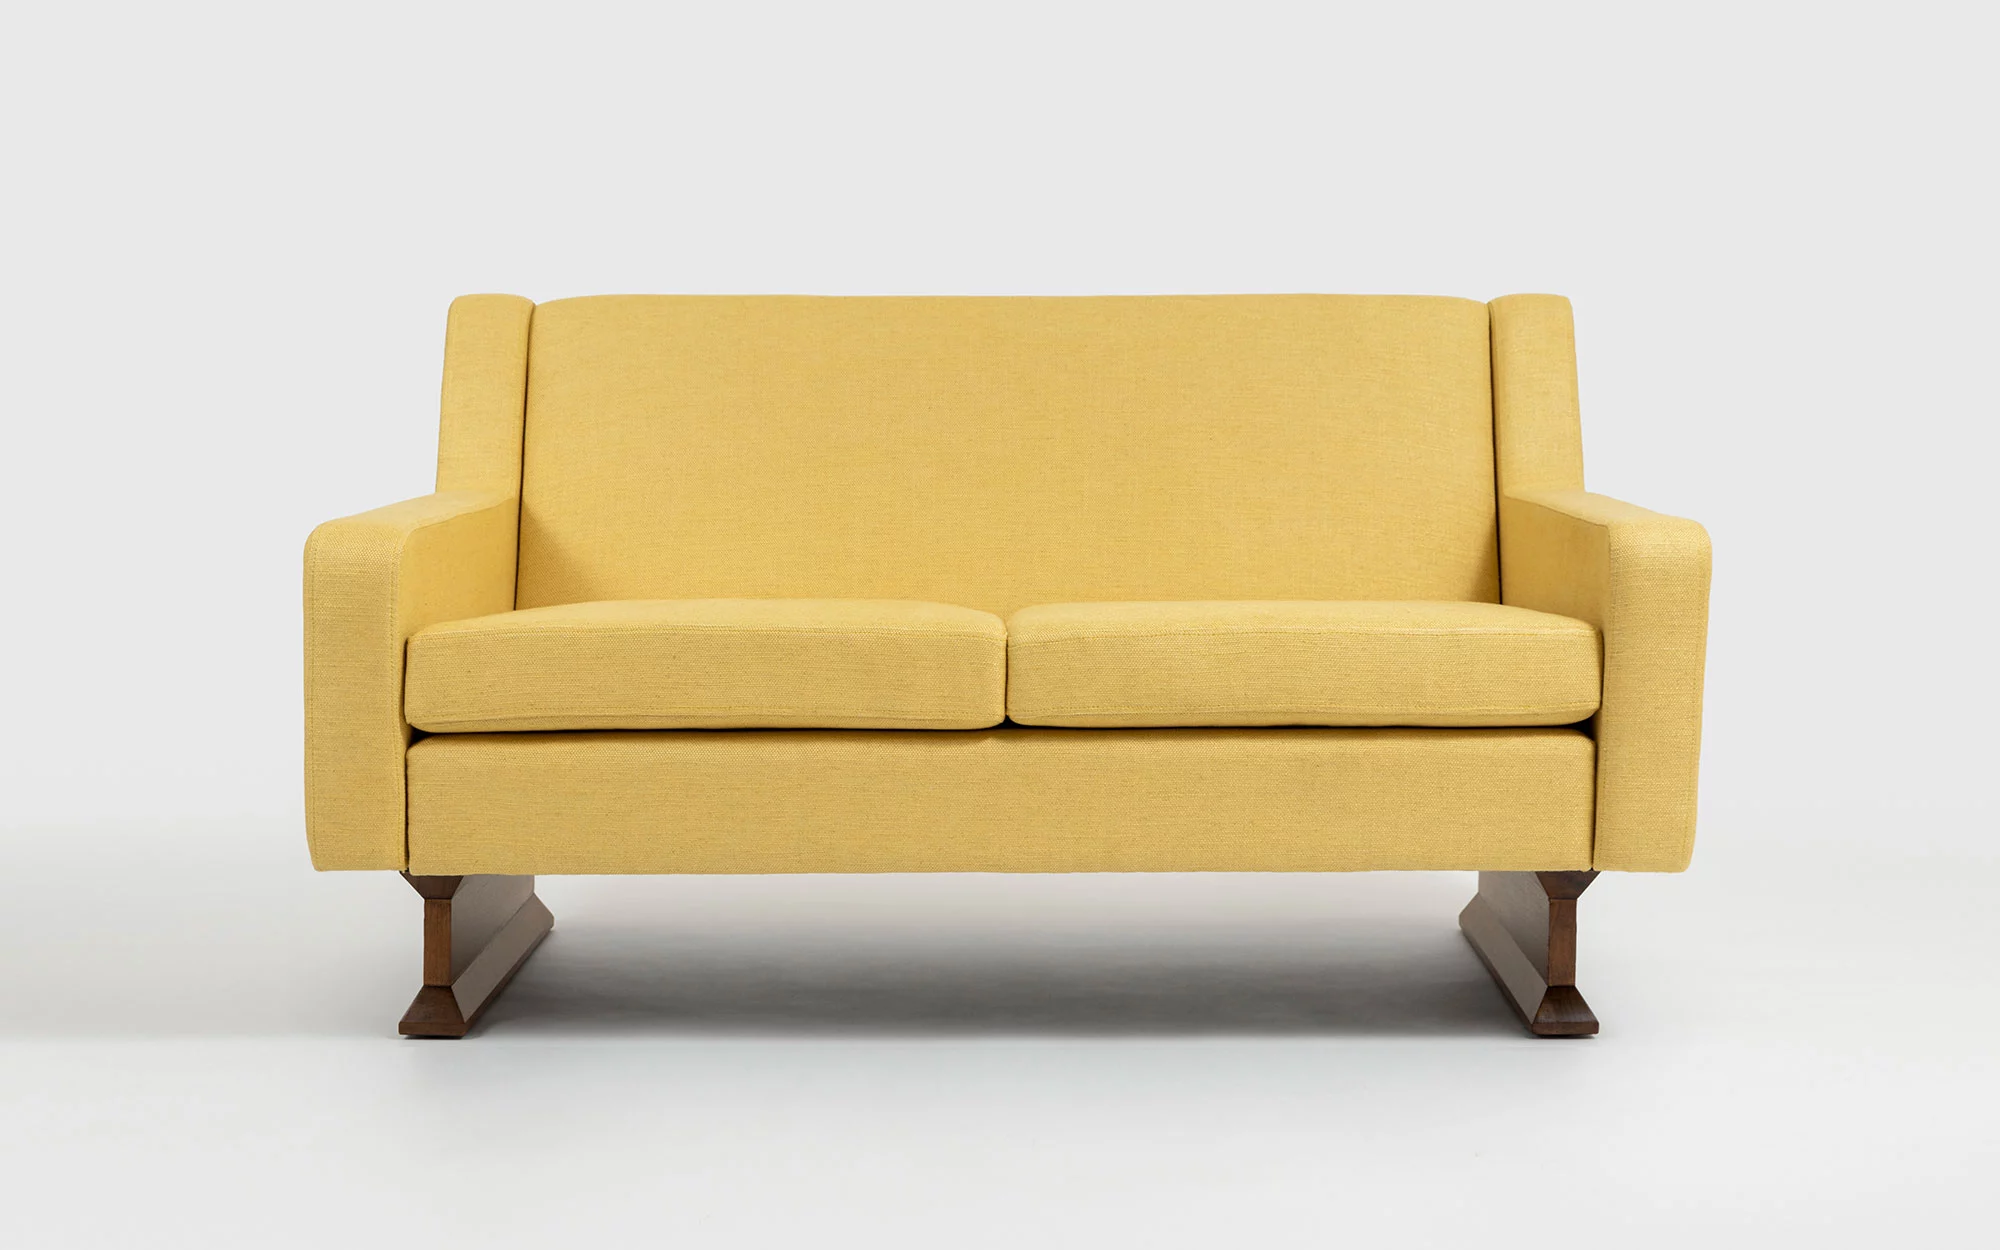 Divano DV33 (Small) - Franco Albini - seating sofa- Galerie kreo